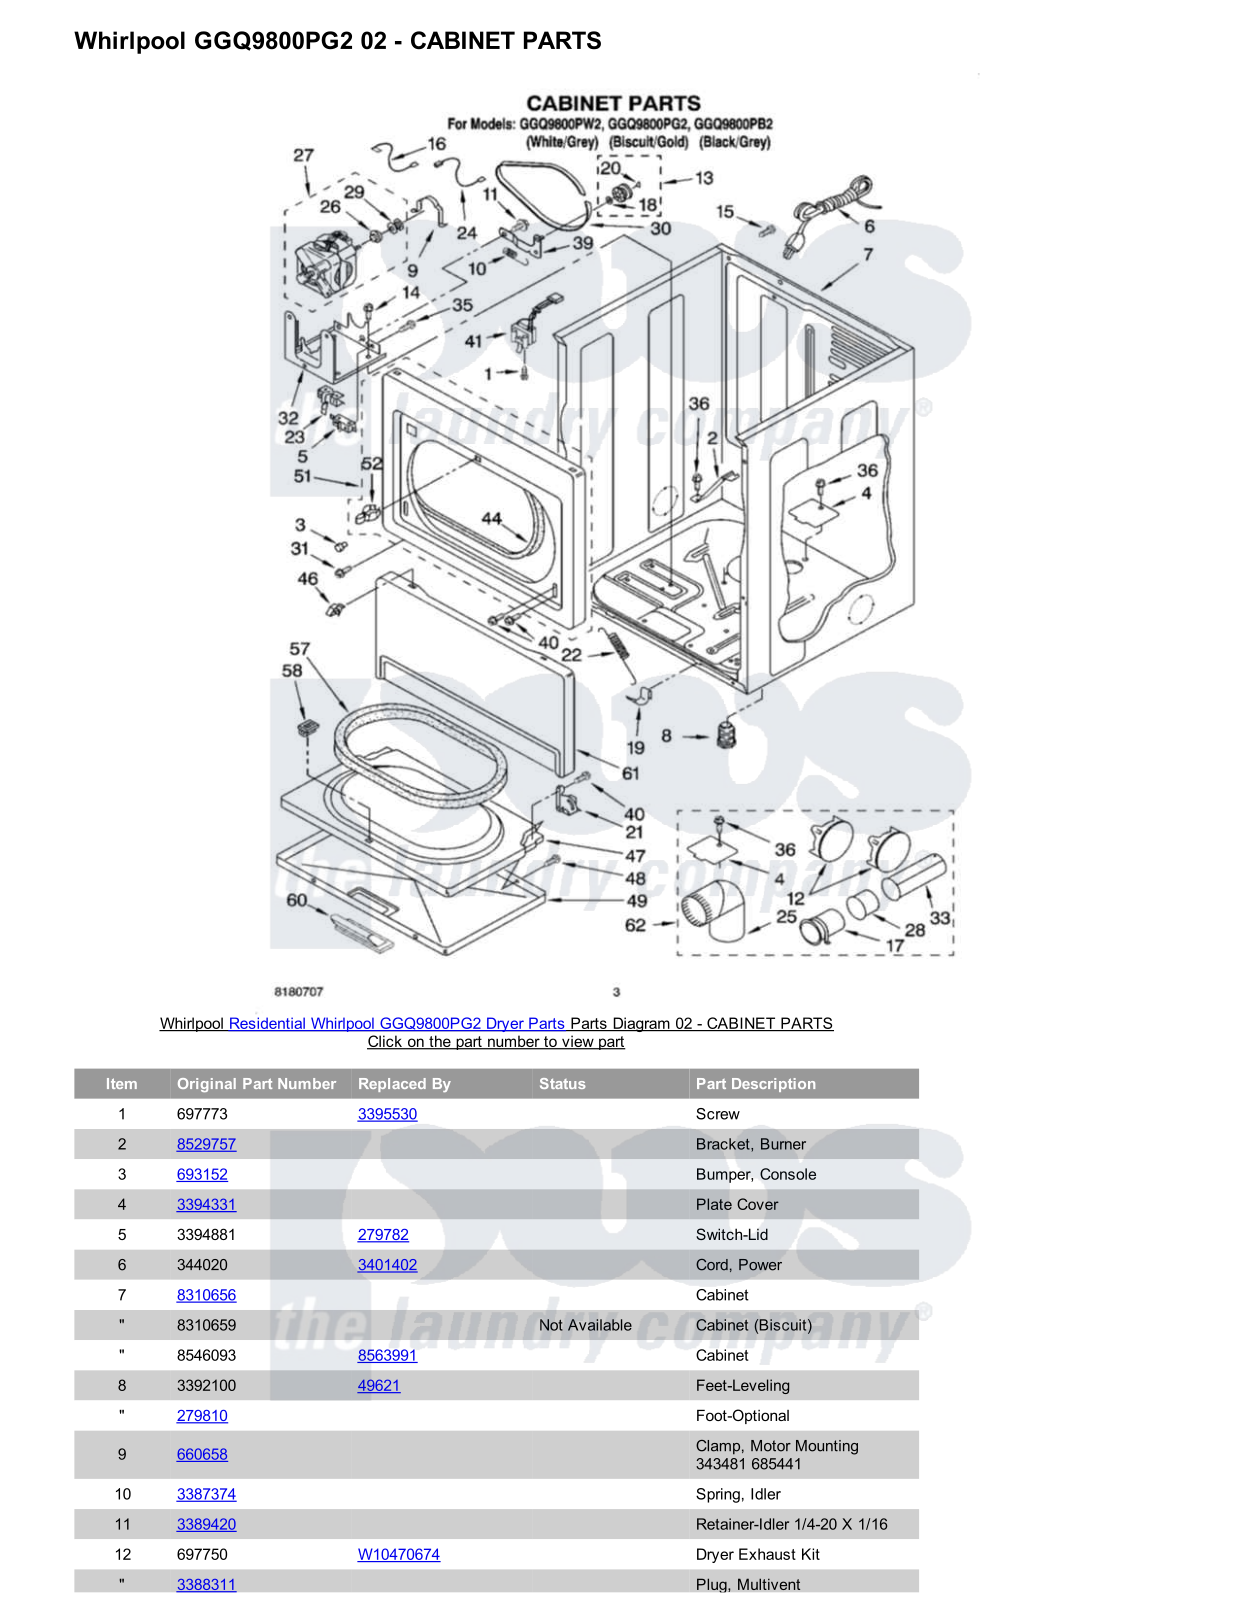 Whirlpool GGQ9800PG2 Parts Diagram